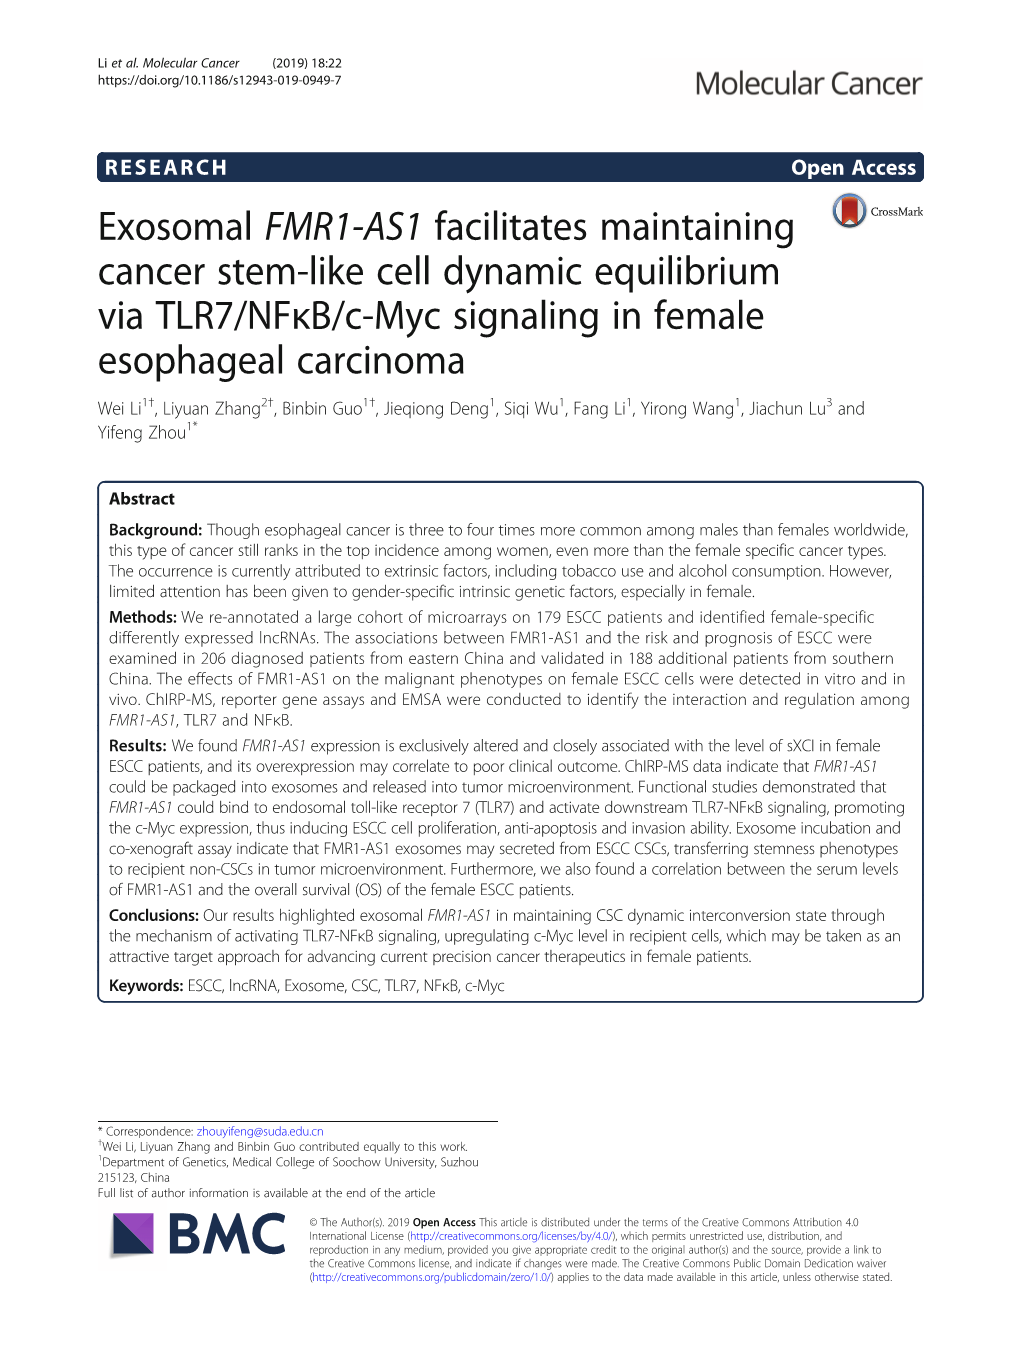 Exosomal FMR1-AS1 Facilitates Maintaining Cancer Stem-Like Cell